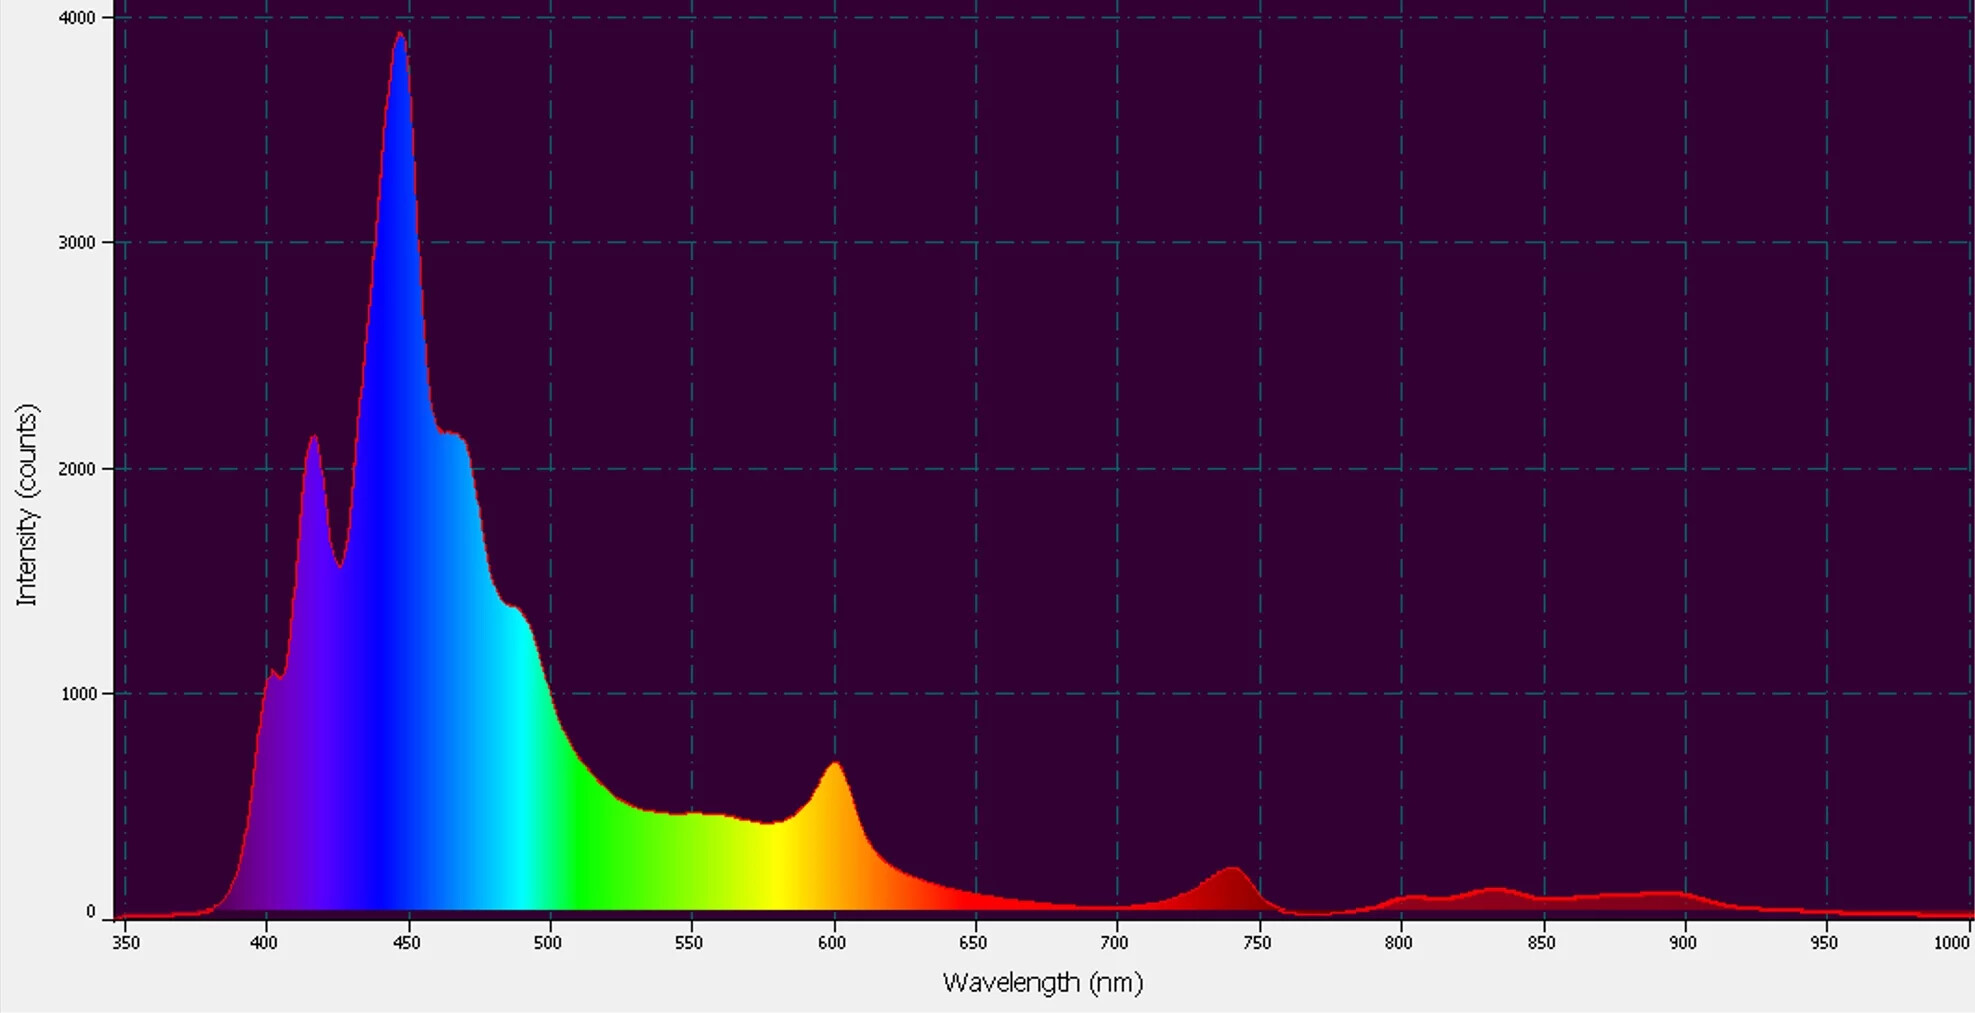 Figure 3. Spectral Power Distribution of the Orphek Atlantik iCon.